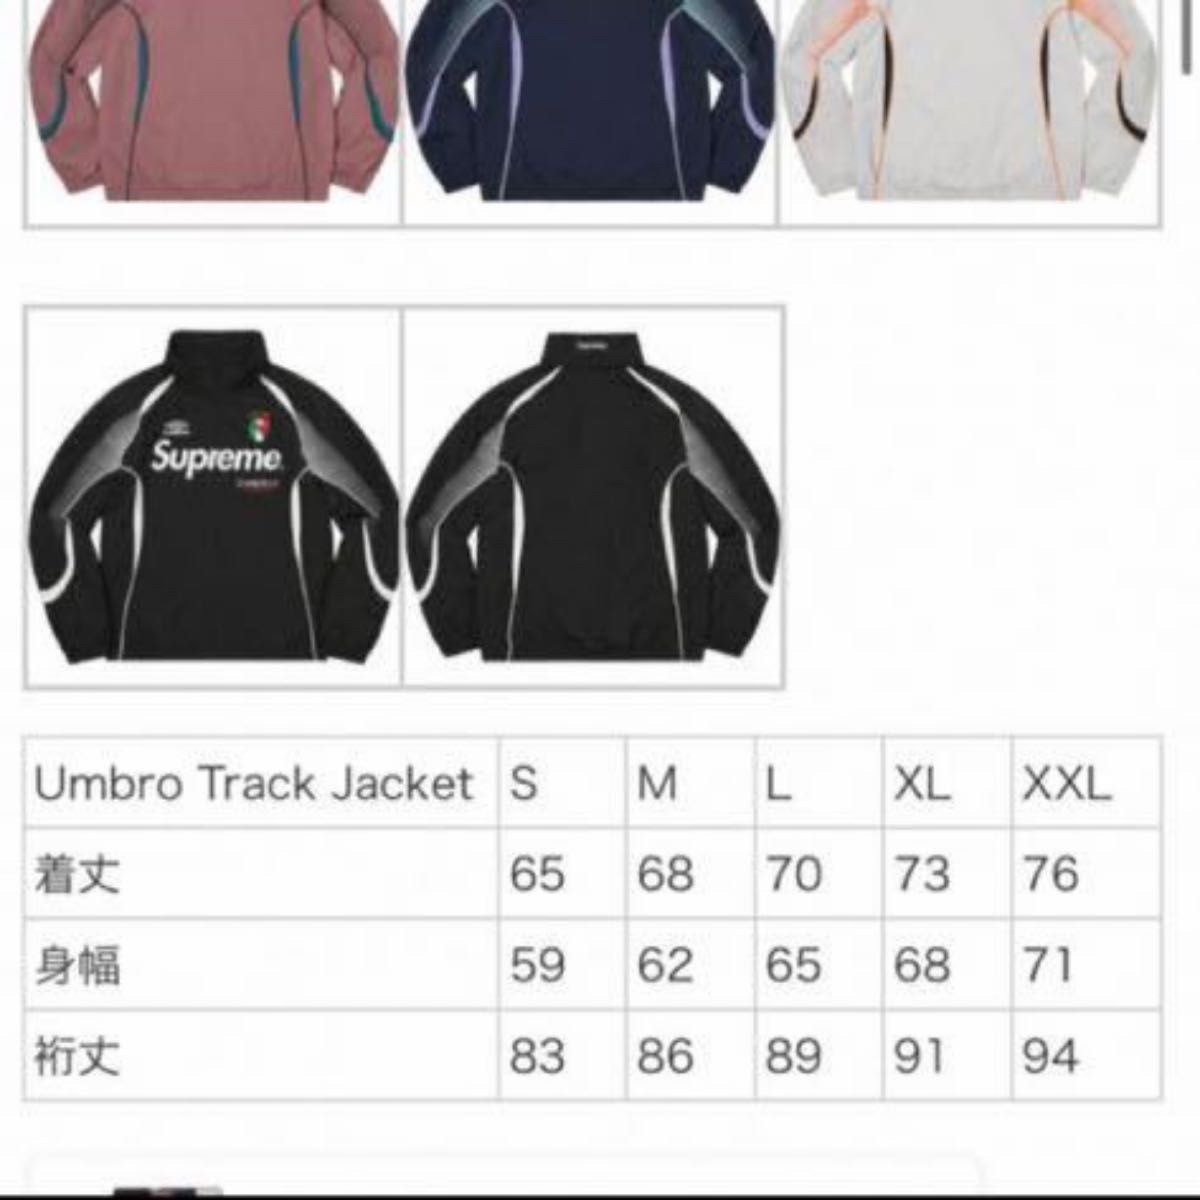 Supreme / Umbro Track Jacket Grey 【XXL】シュプリーム アンブロ トラックジャケット グレー